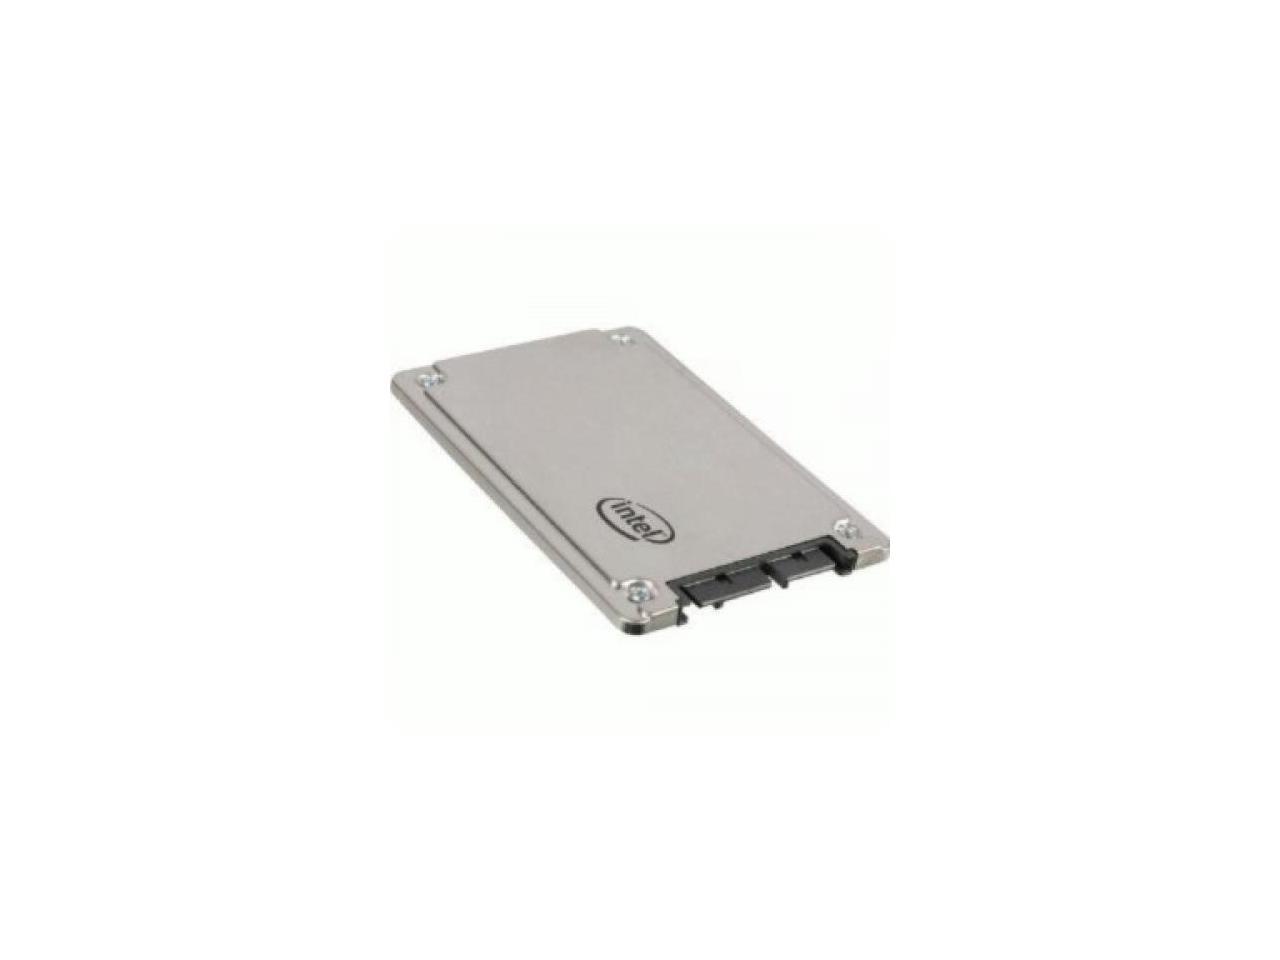 Intel Dc S3610 400 Gb 1.8" Internal Solid State Drive